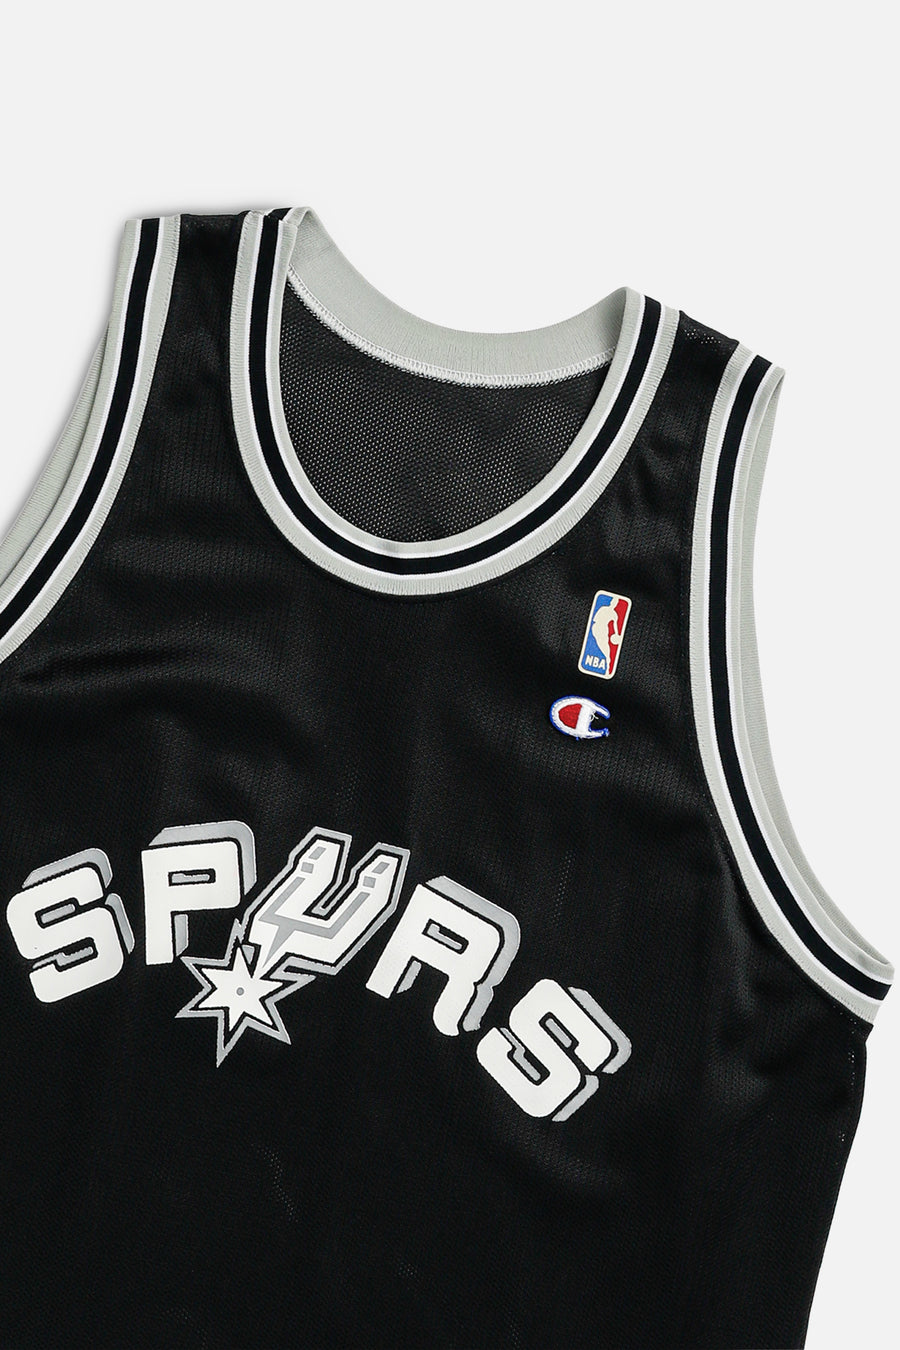 Vintage San Antonio Spurs NBA Jersey - XL